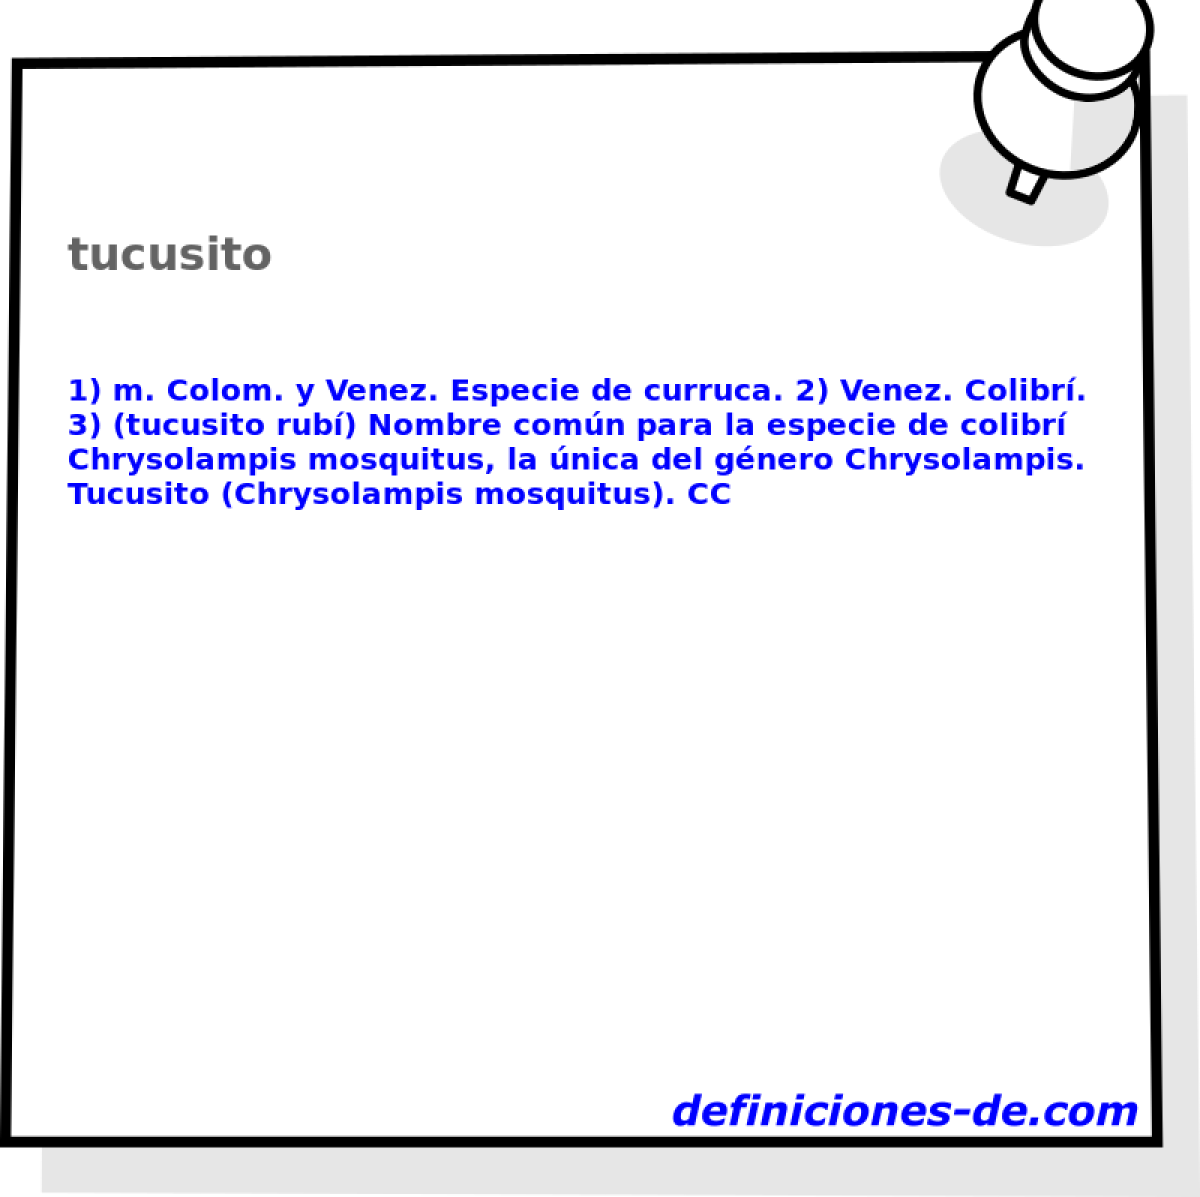 tucusito 